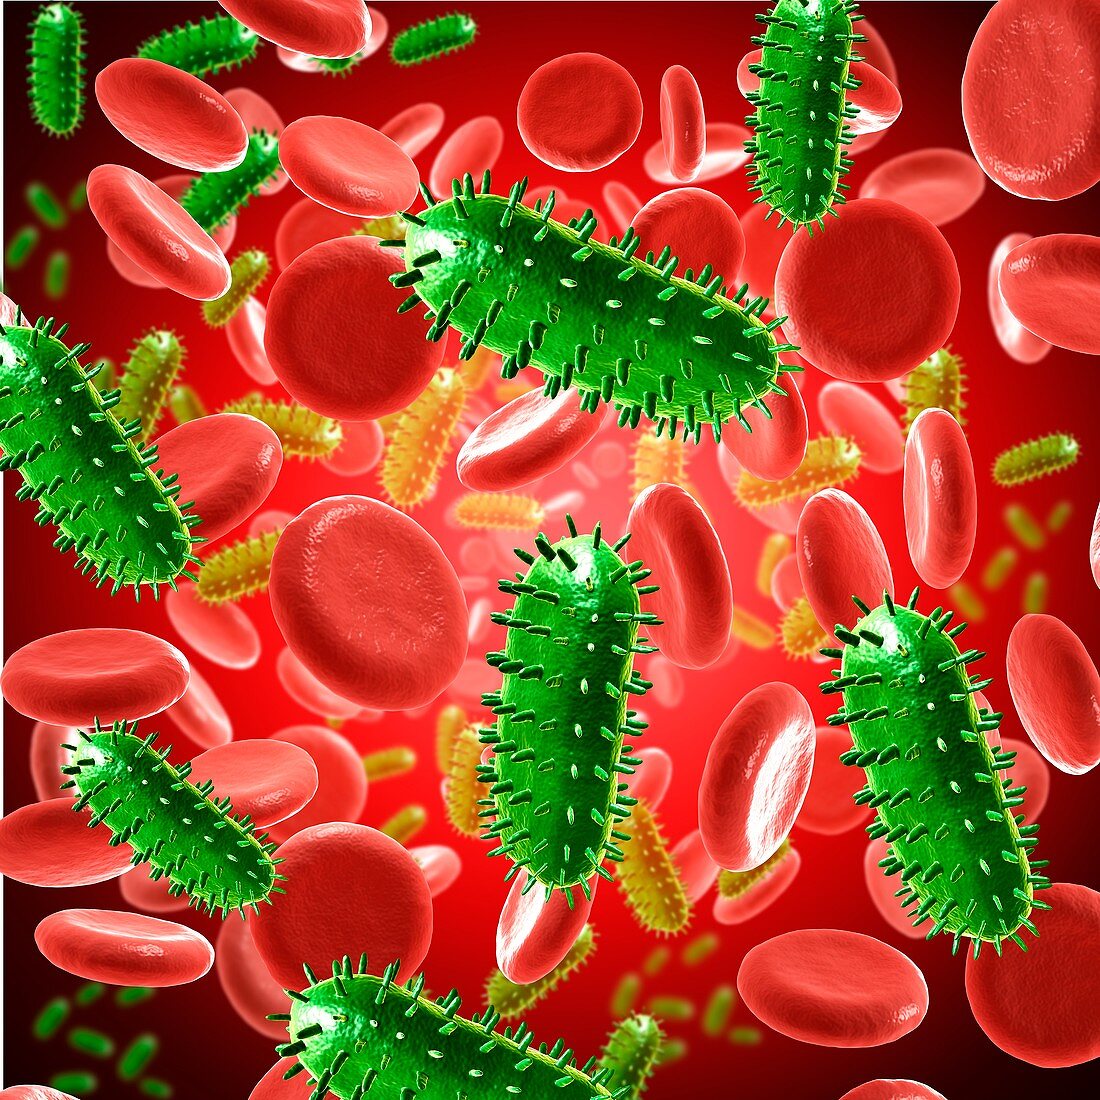 Rabies virus in the blood, illustration